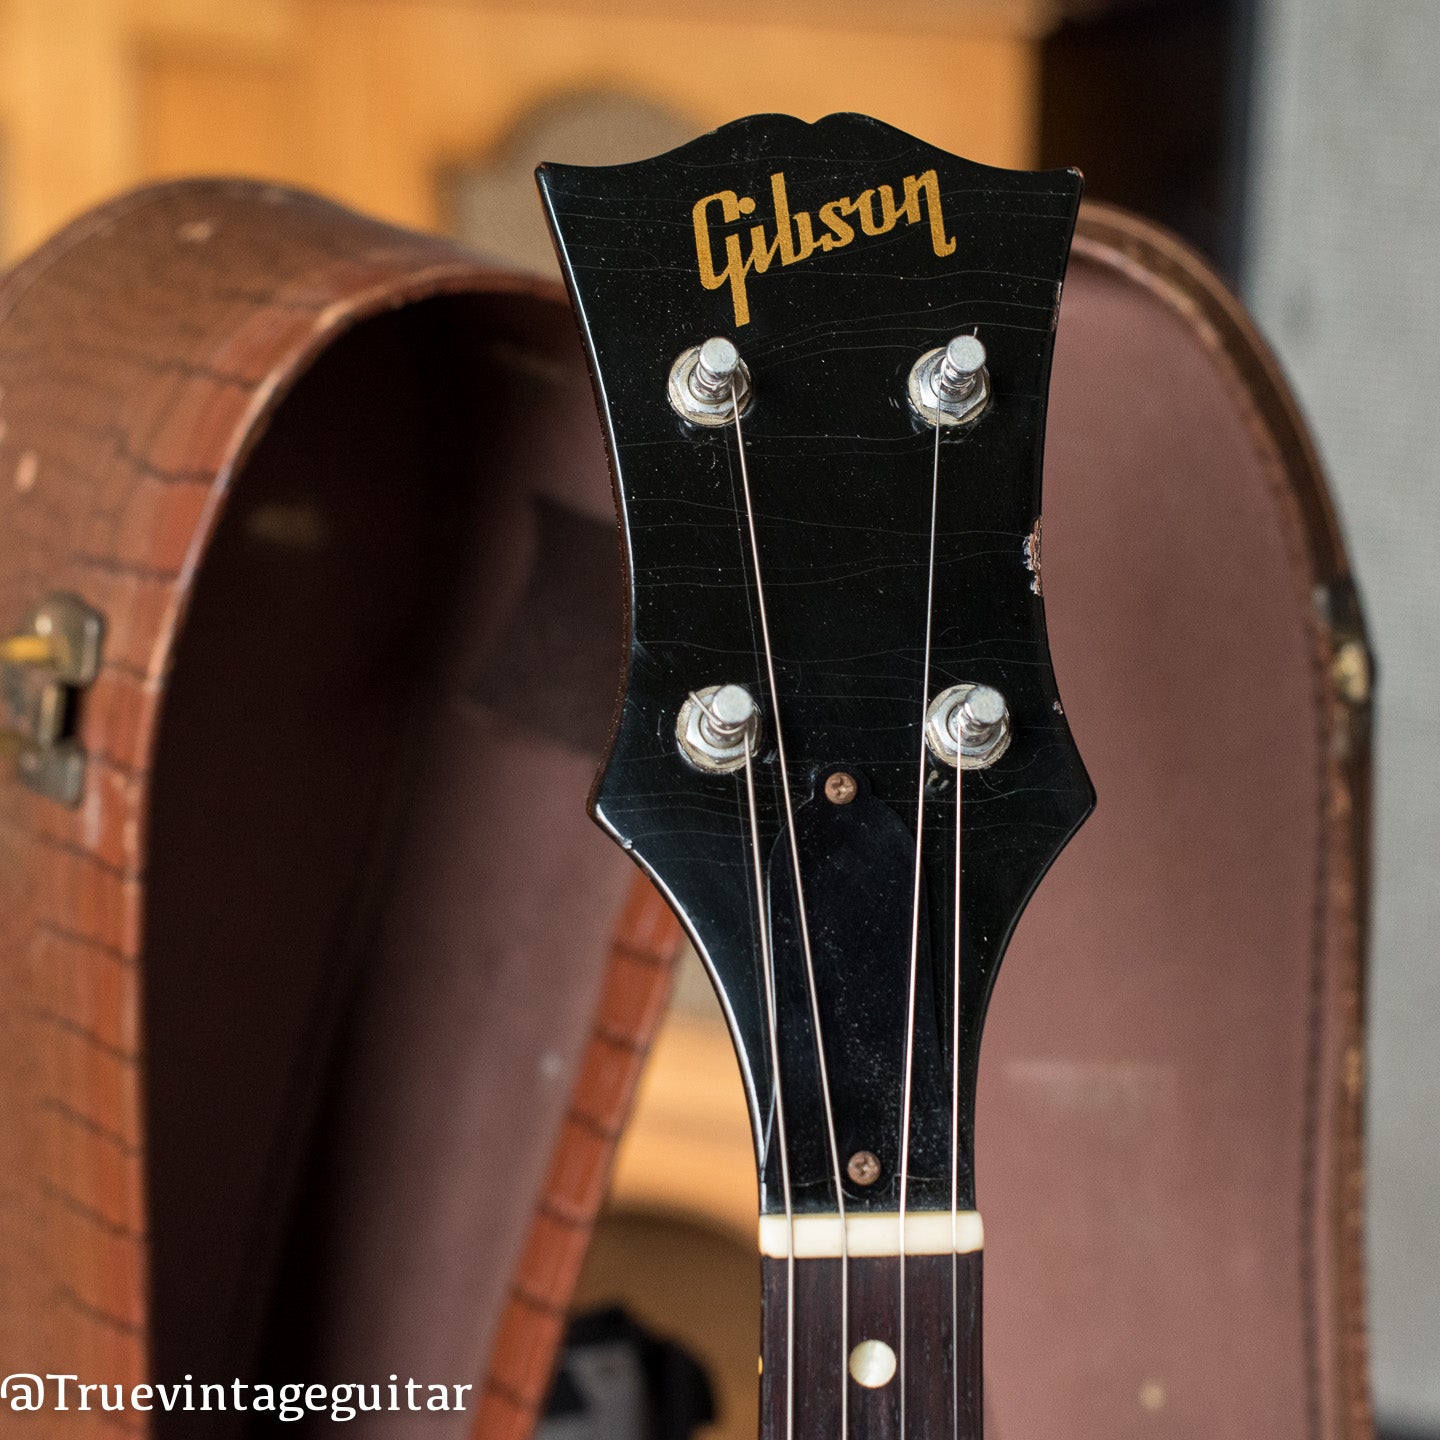 Vintage 1957 Gibson headstock gold logo